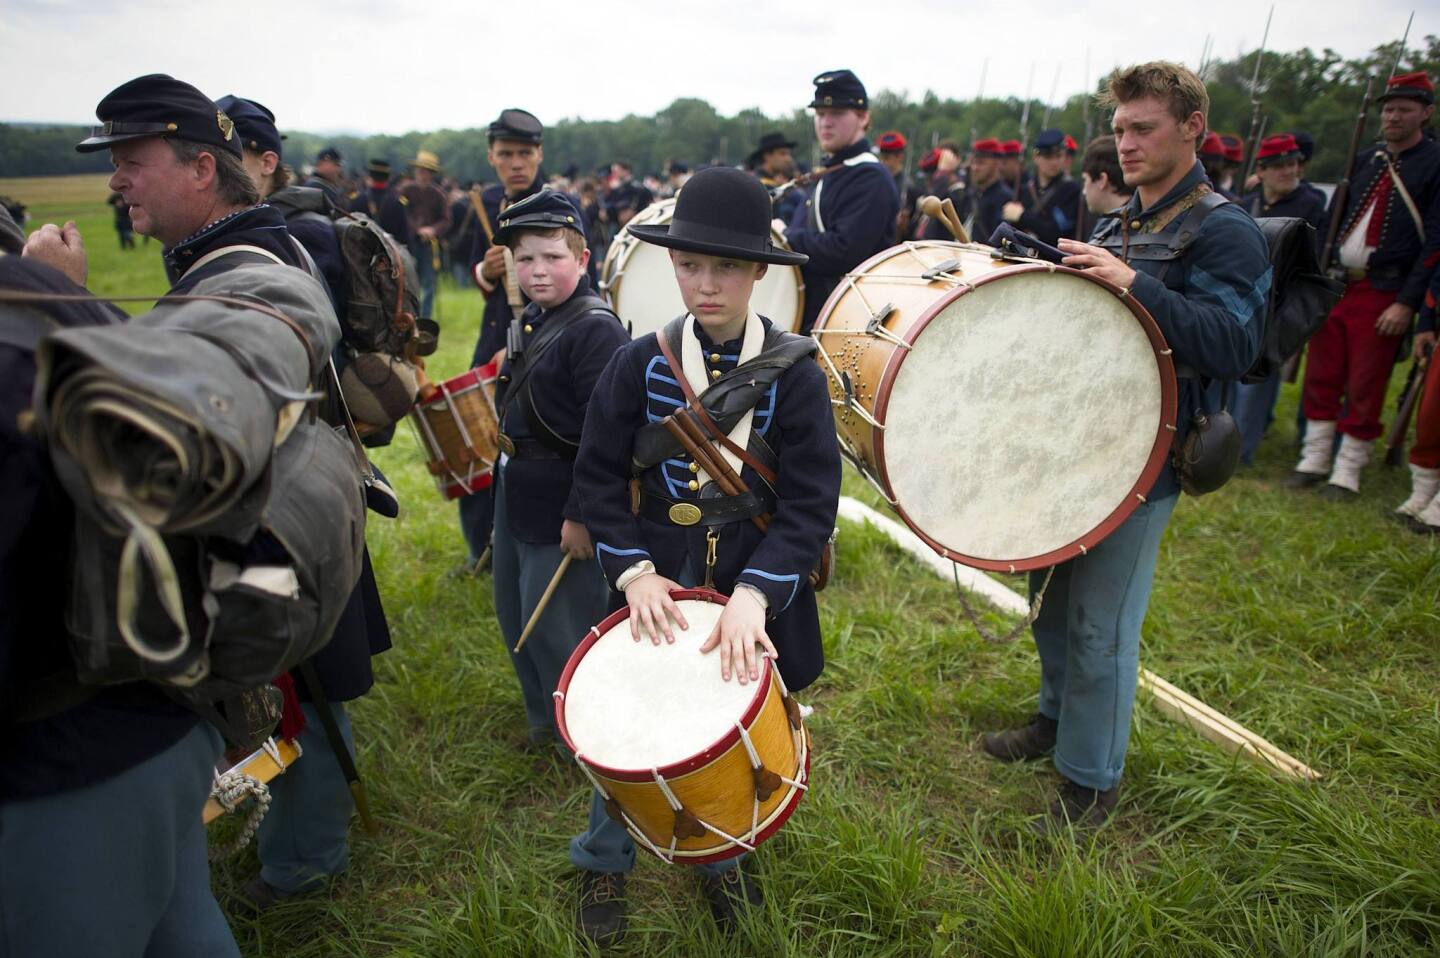 Union volunteer drummer boys during reenactment of Battle of Gettysburg, in Gettysburg